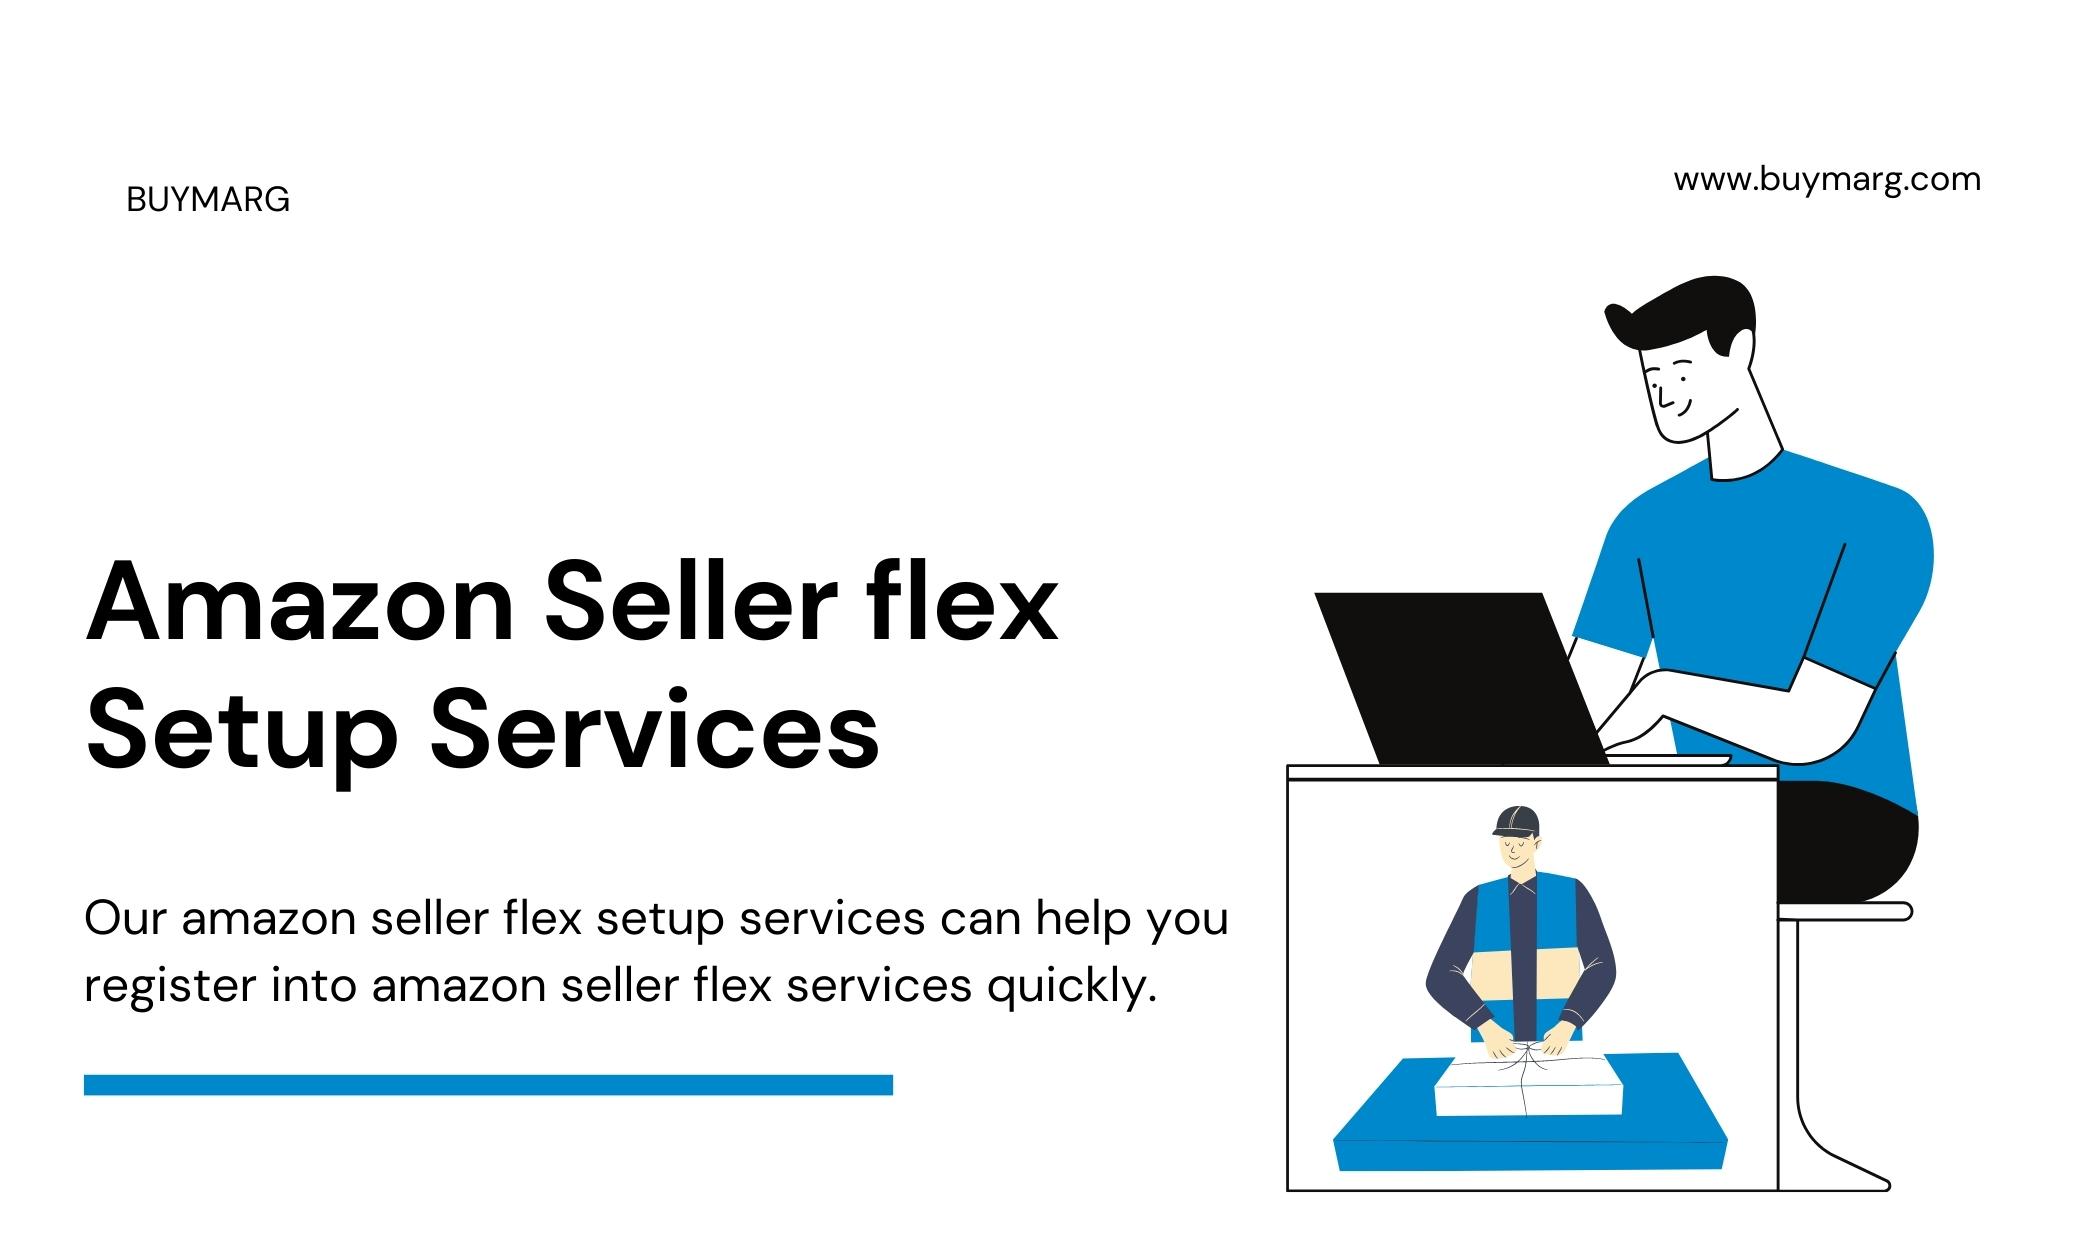 Amazon Seller flex Setup Services